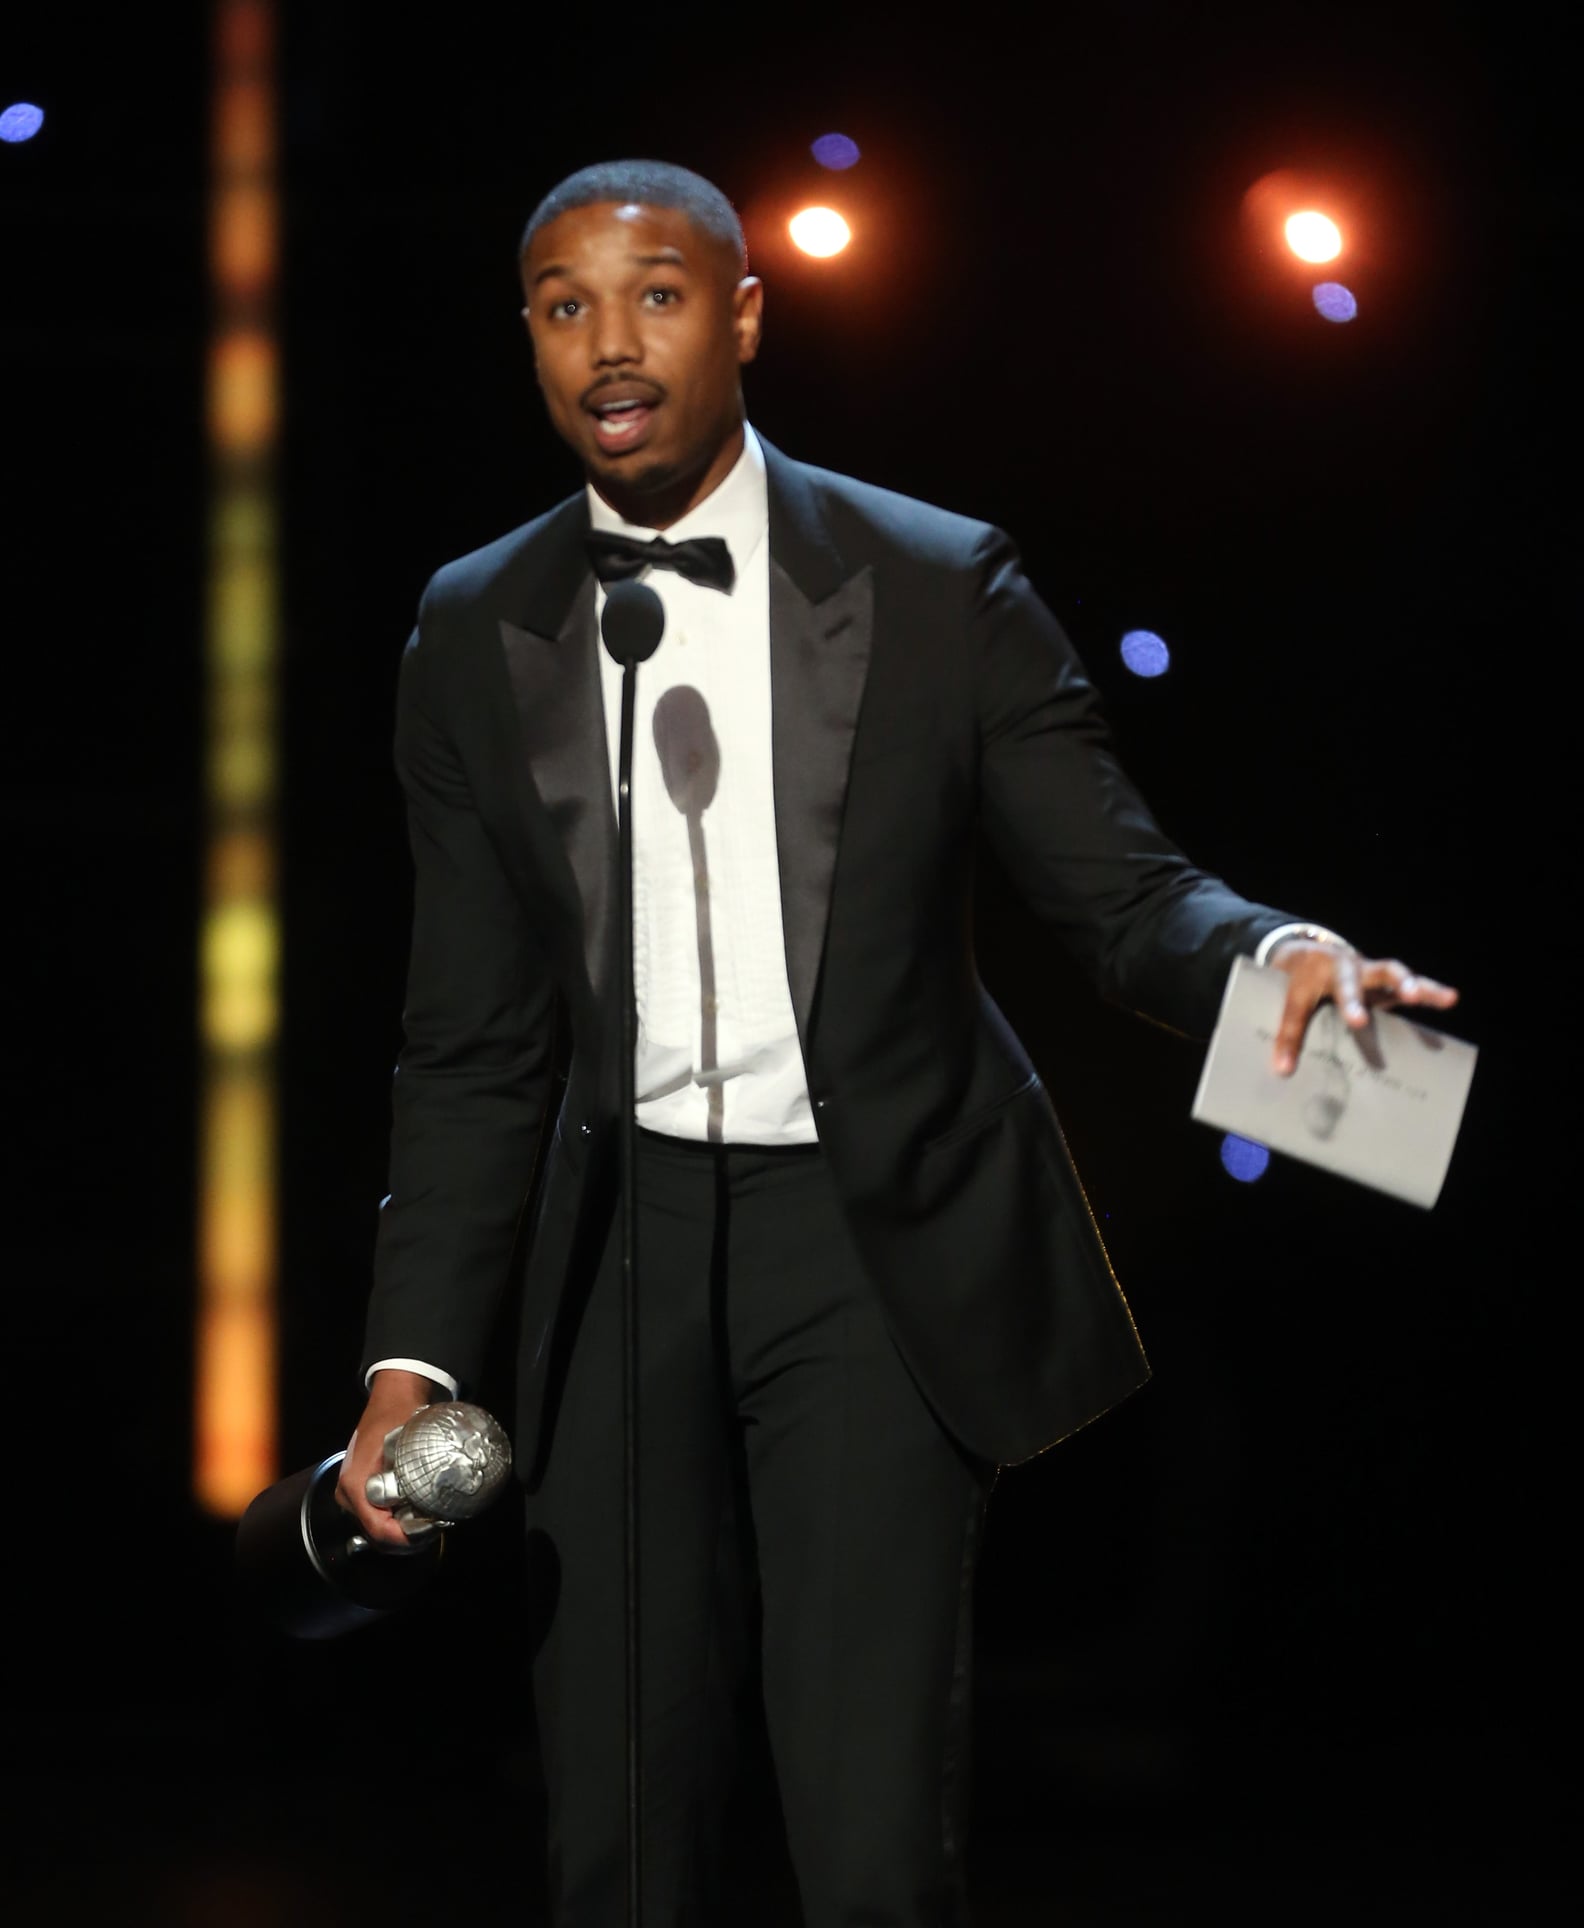 Michael B. Jordan at the NAACP Image Awards 2016 | POPSUGAR Celebrity